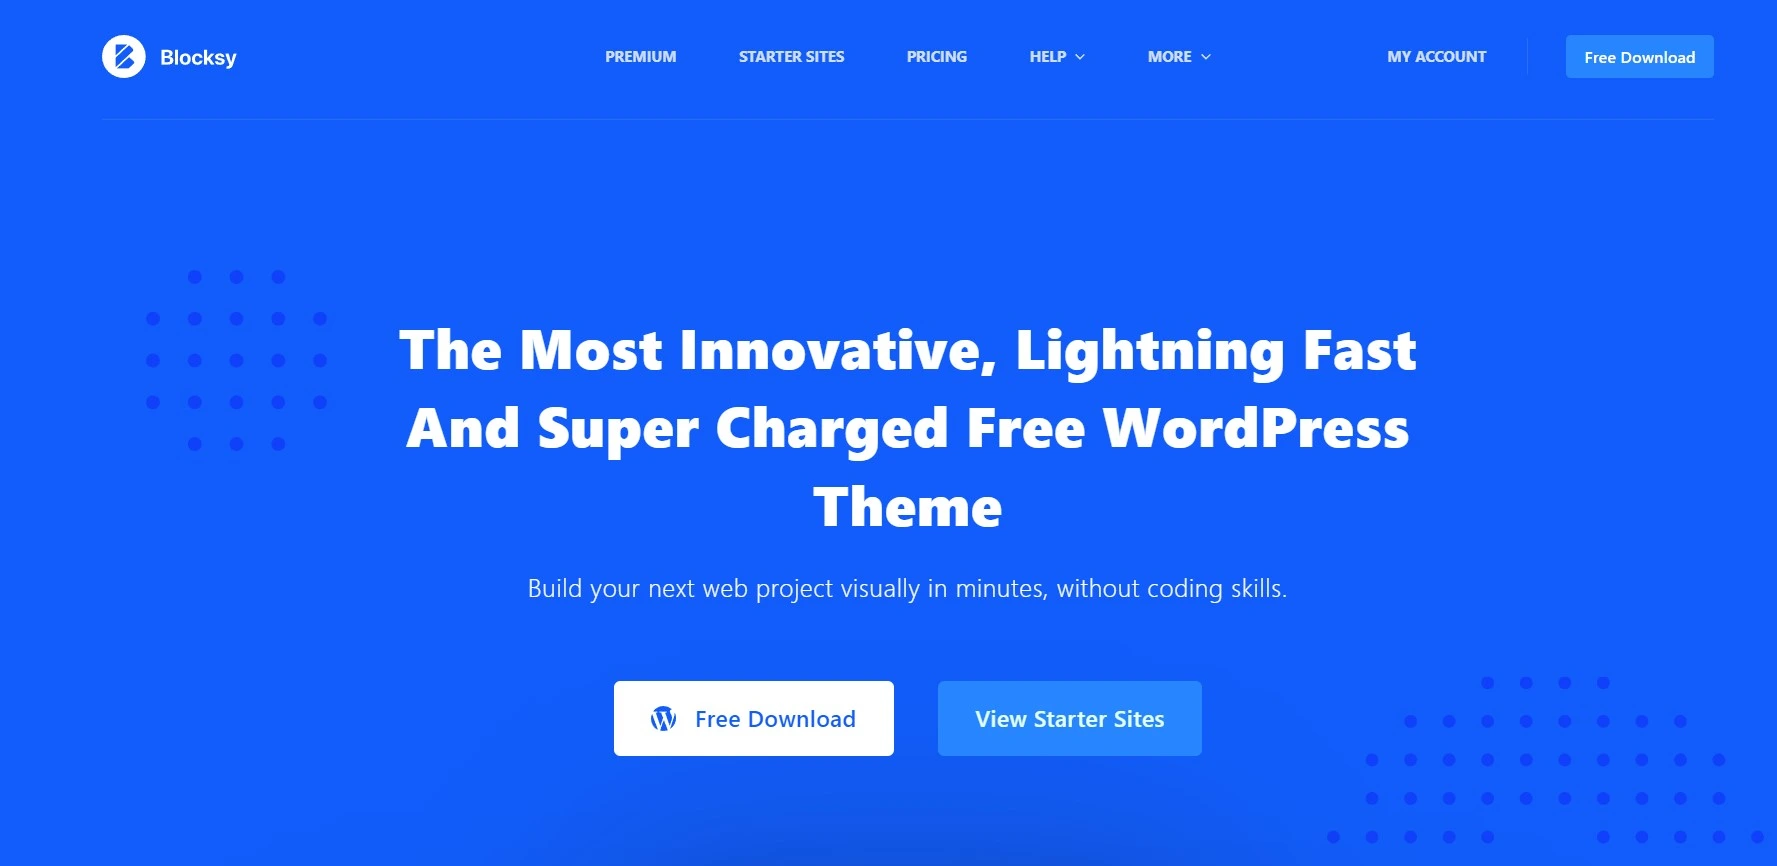 Blocksy super charged free wordpress theme